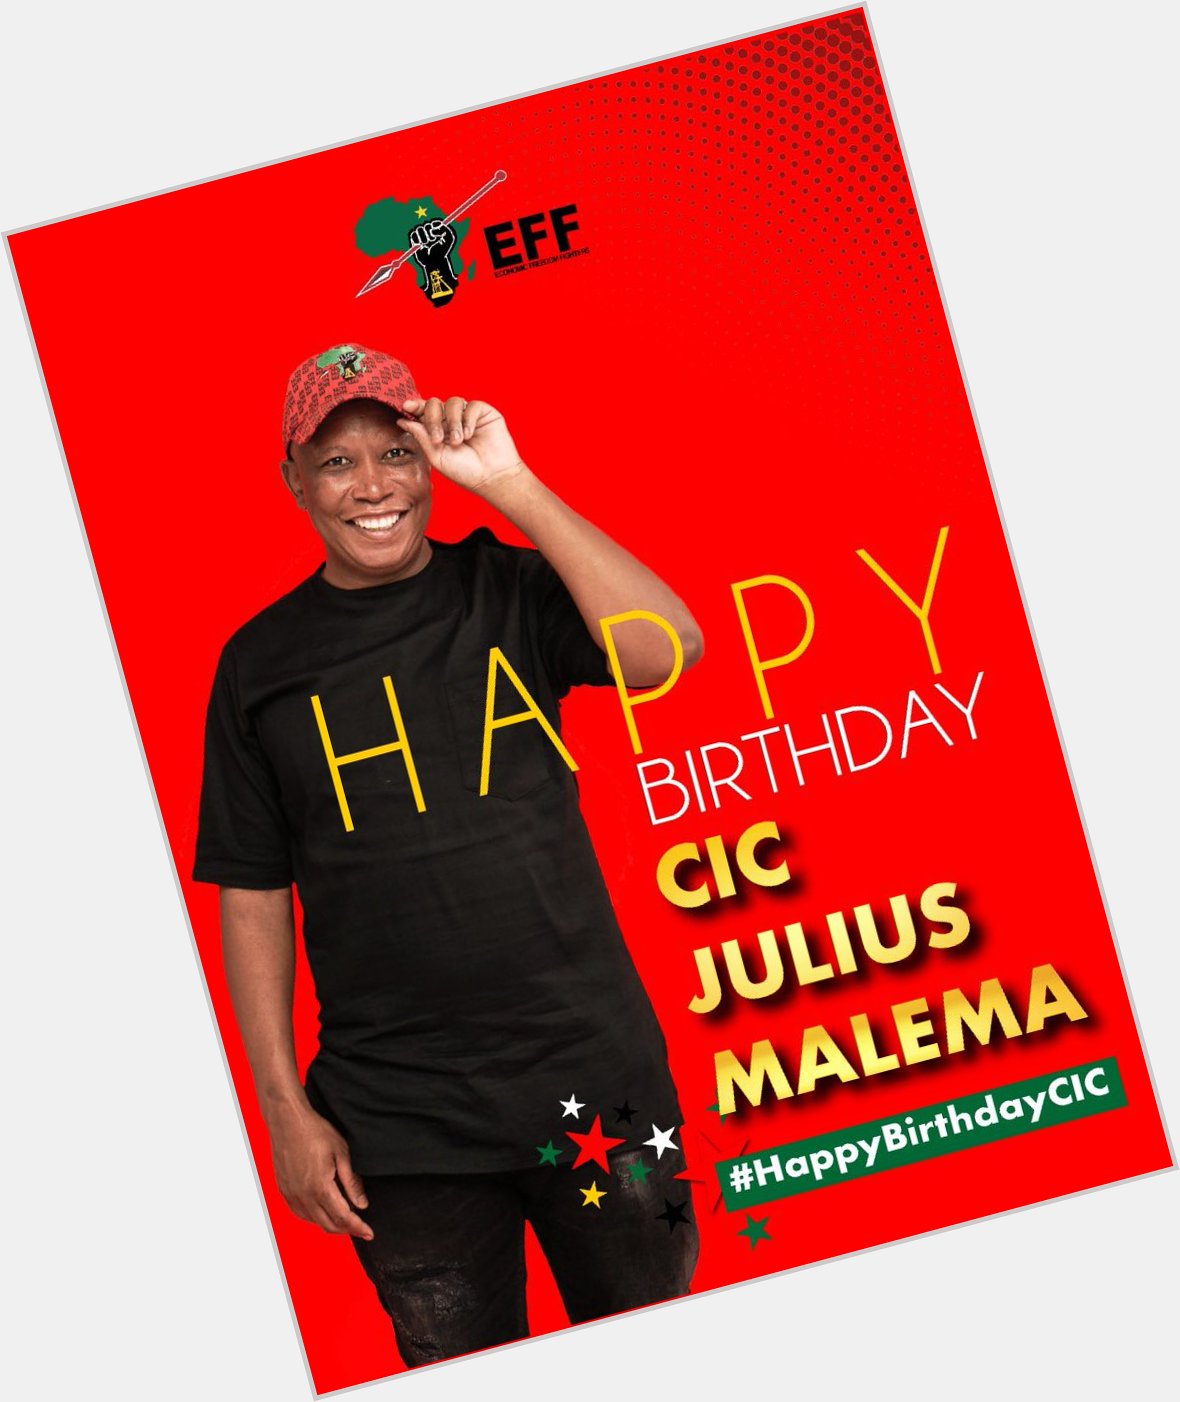 Happy birthday to our president Julius malema   